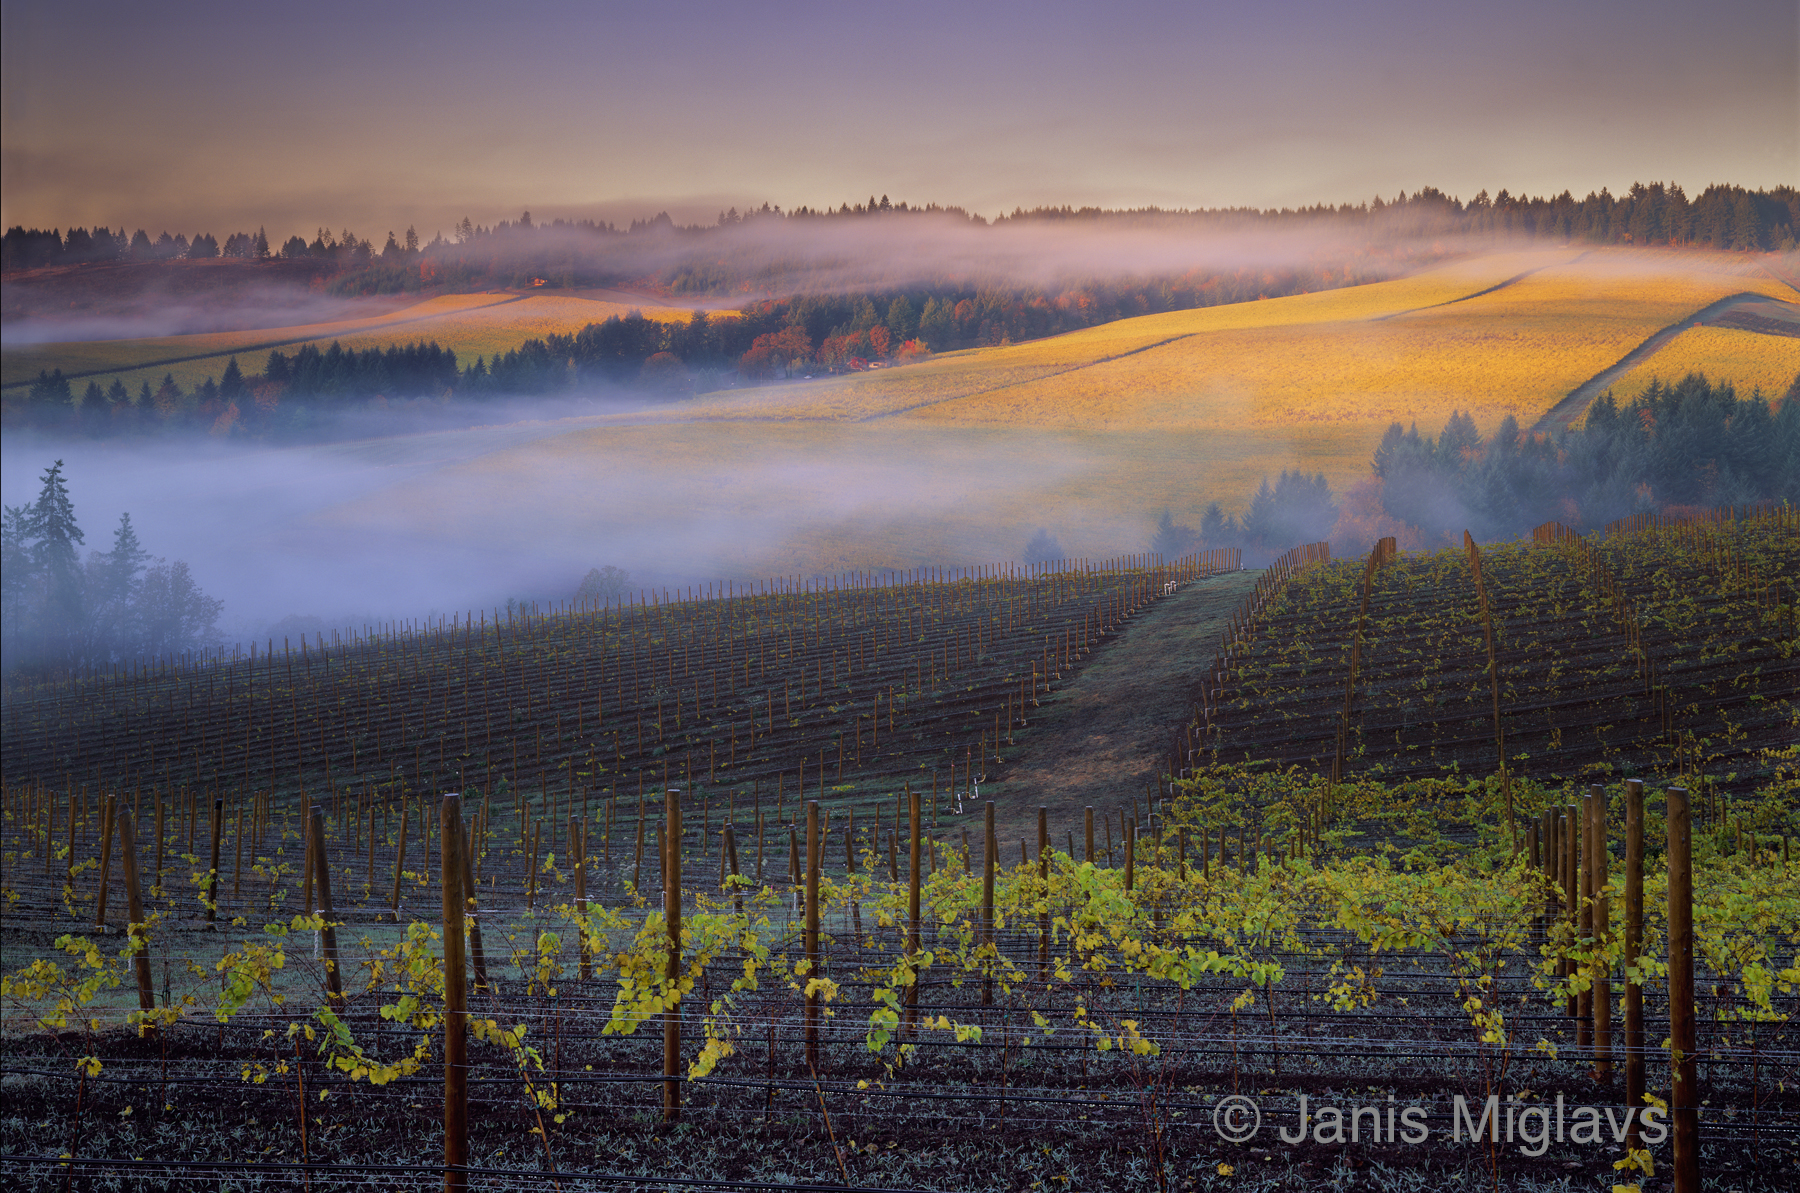 Morning fog sneaks onto Dundee Hills vineyards